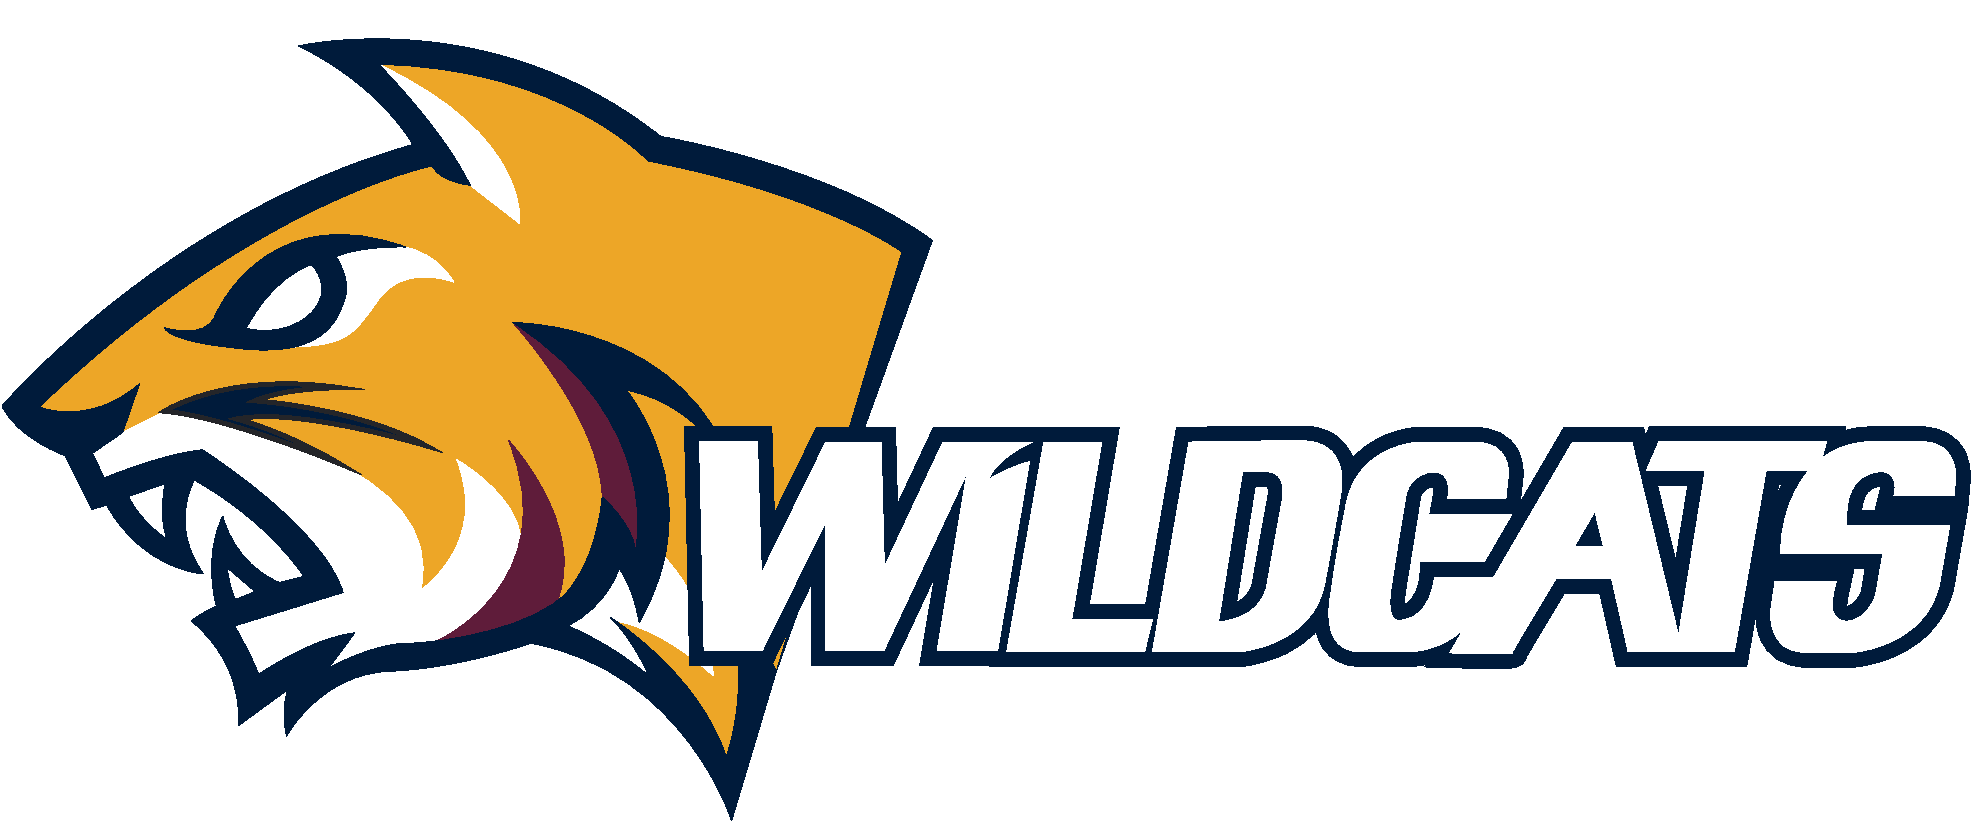 Weston Creek Wildcats Football Club